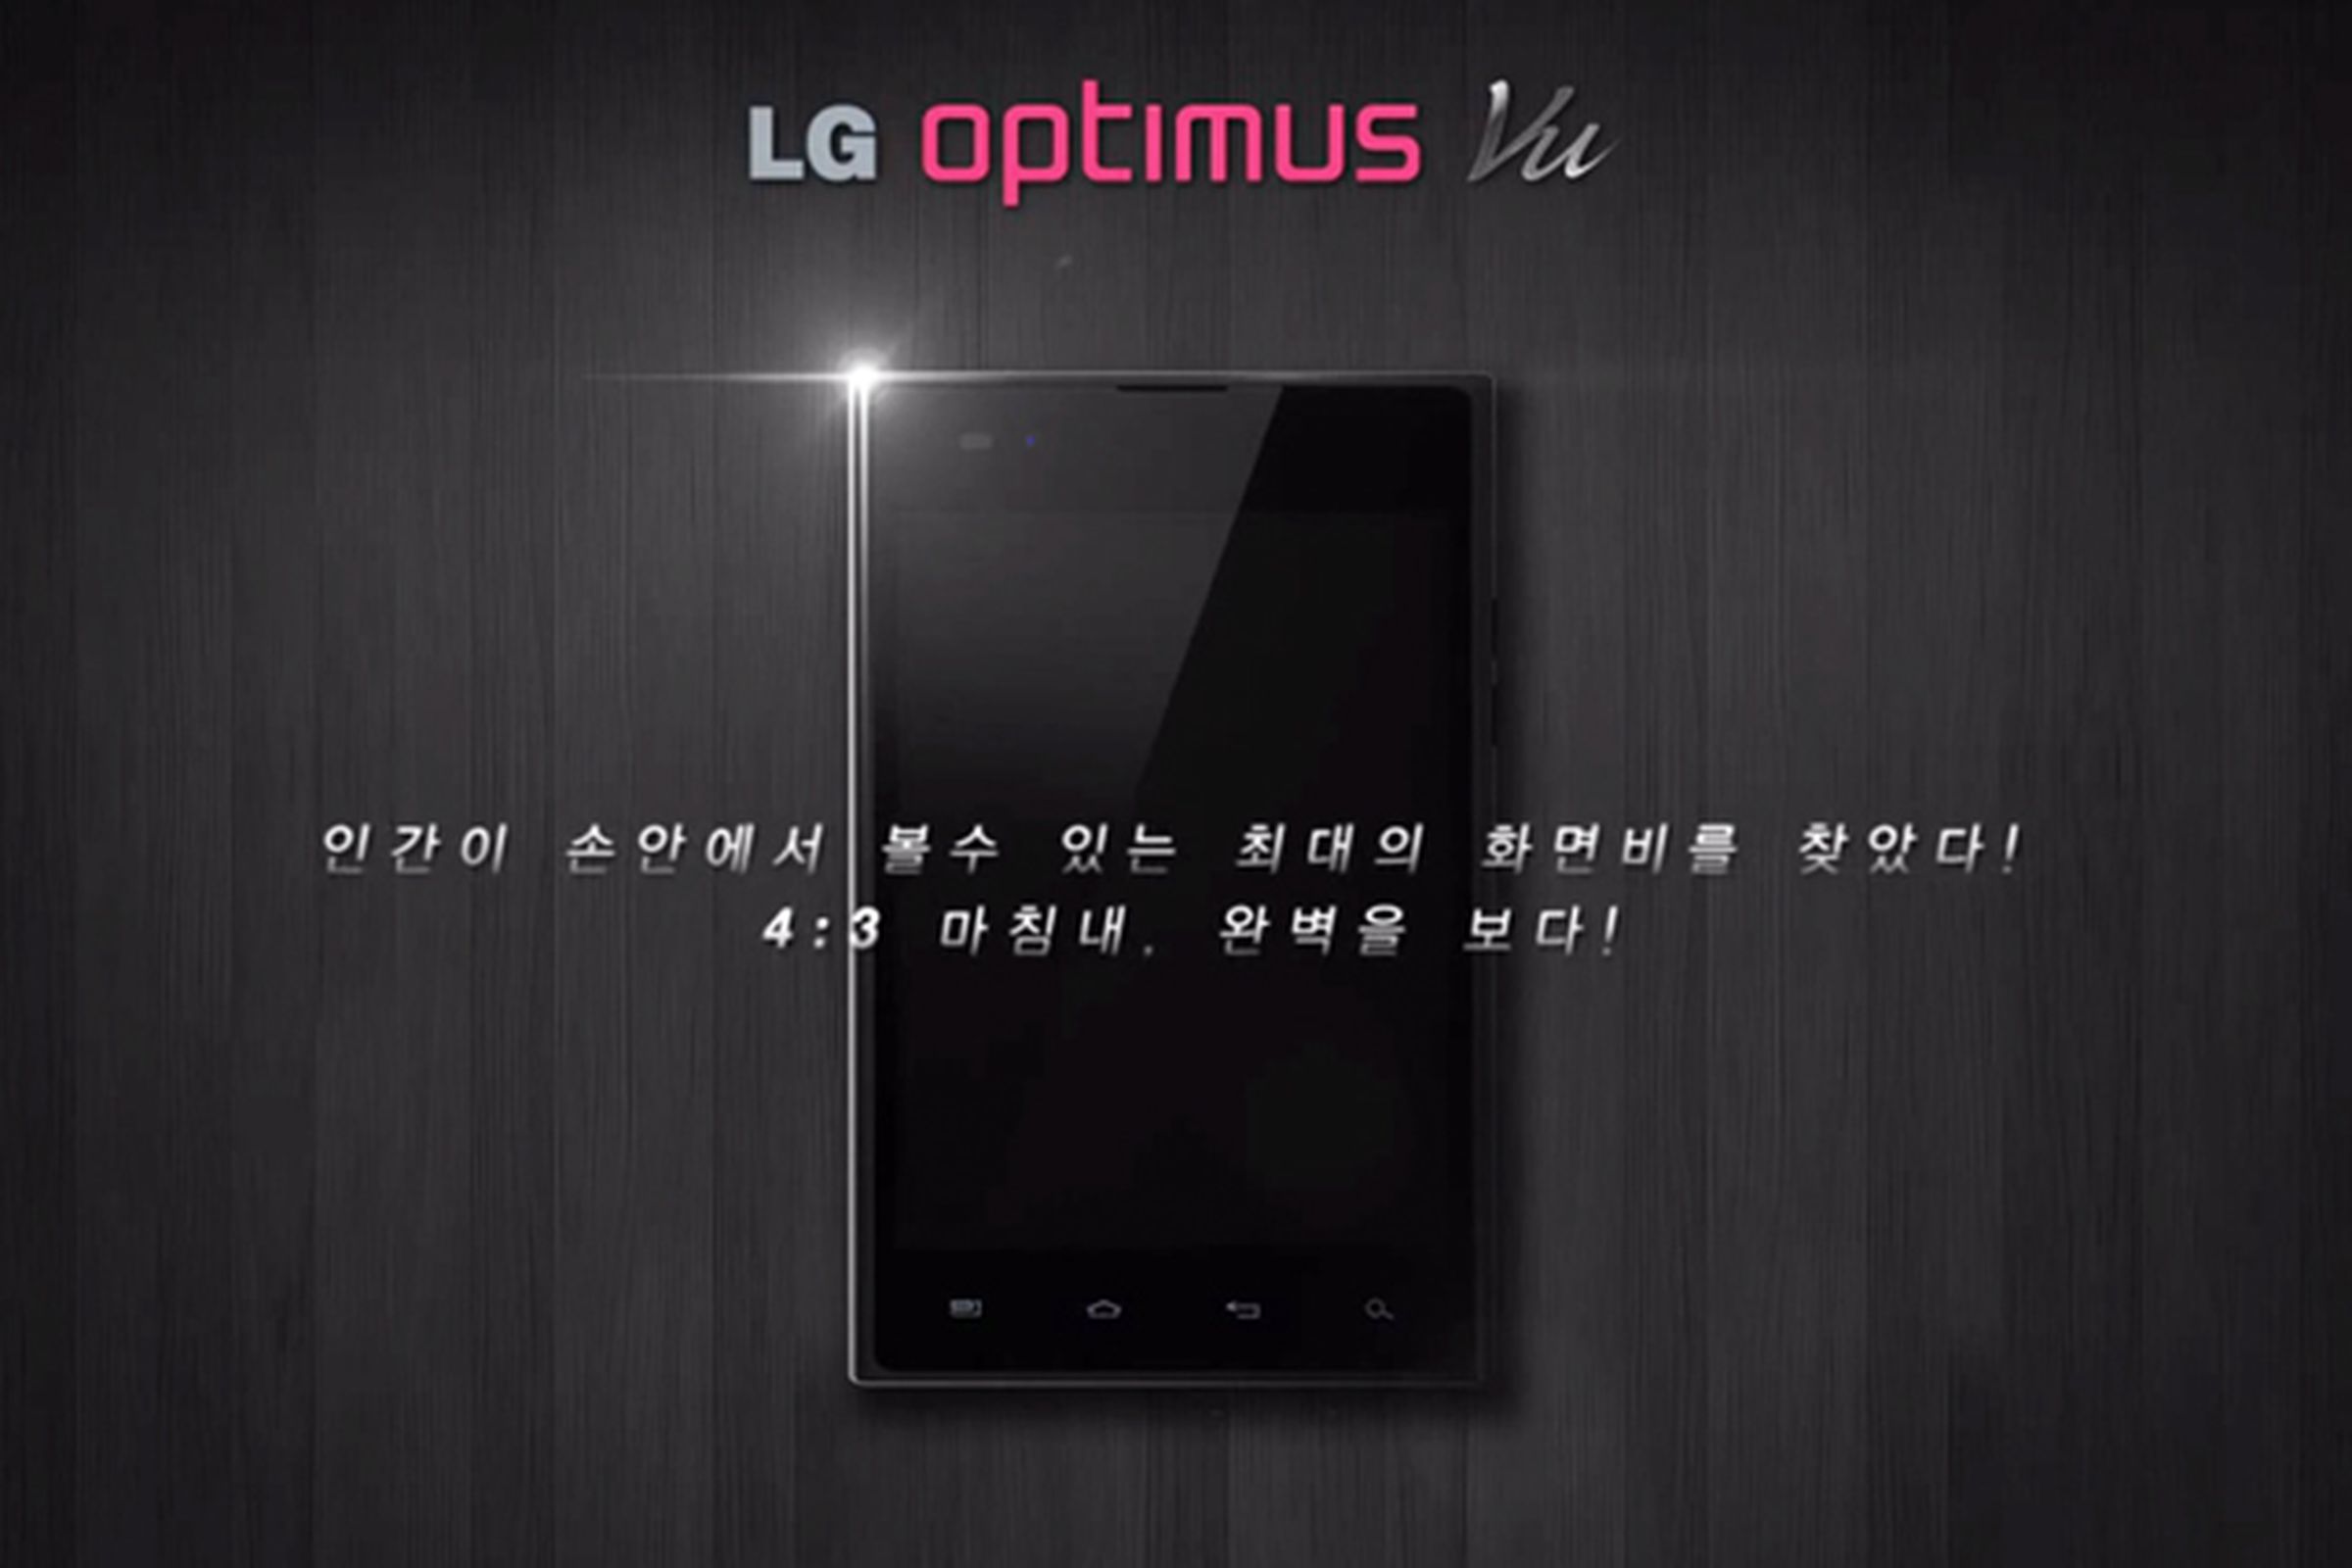 LG Optimus Vu Teaser Image